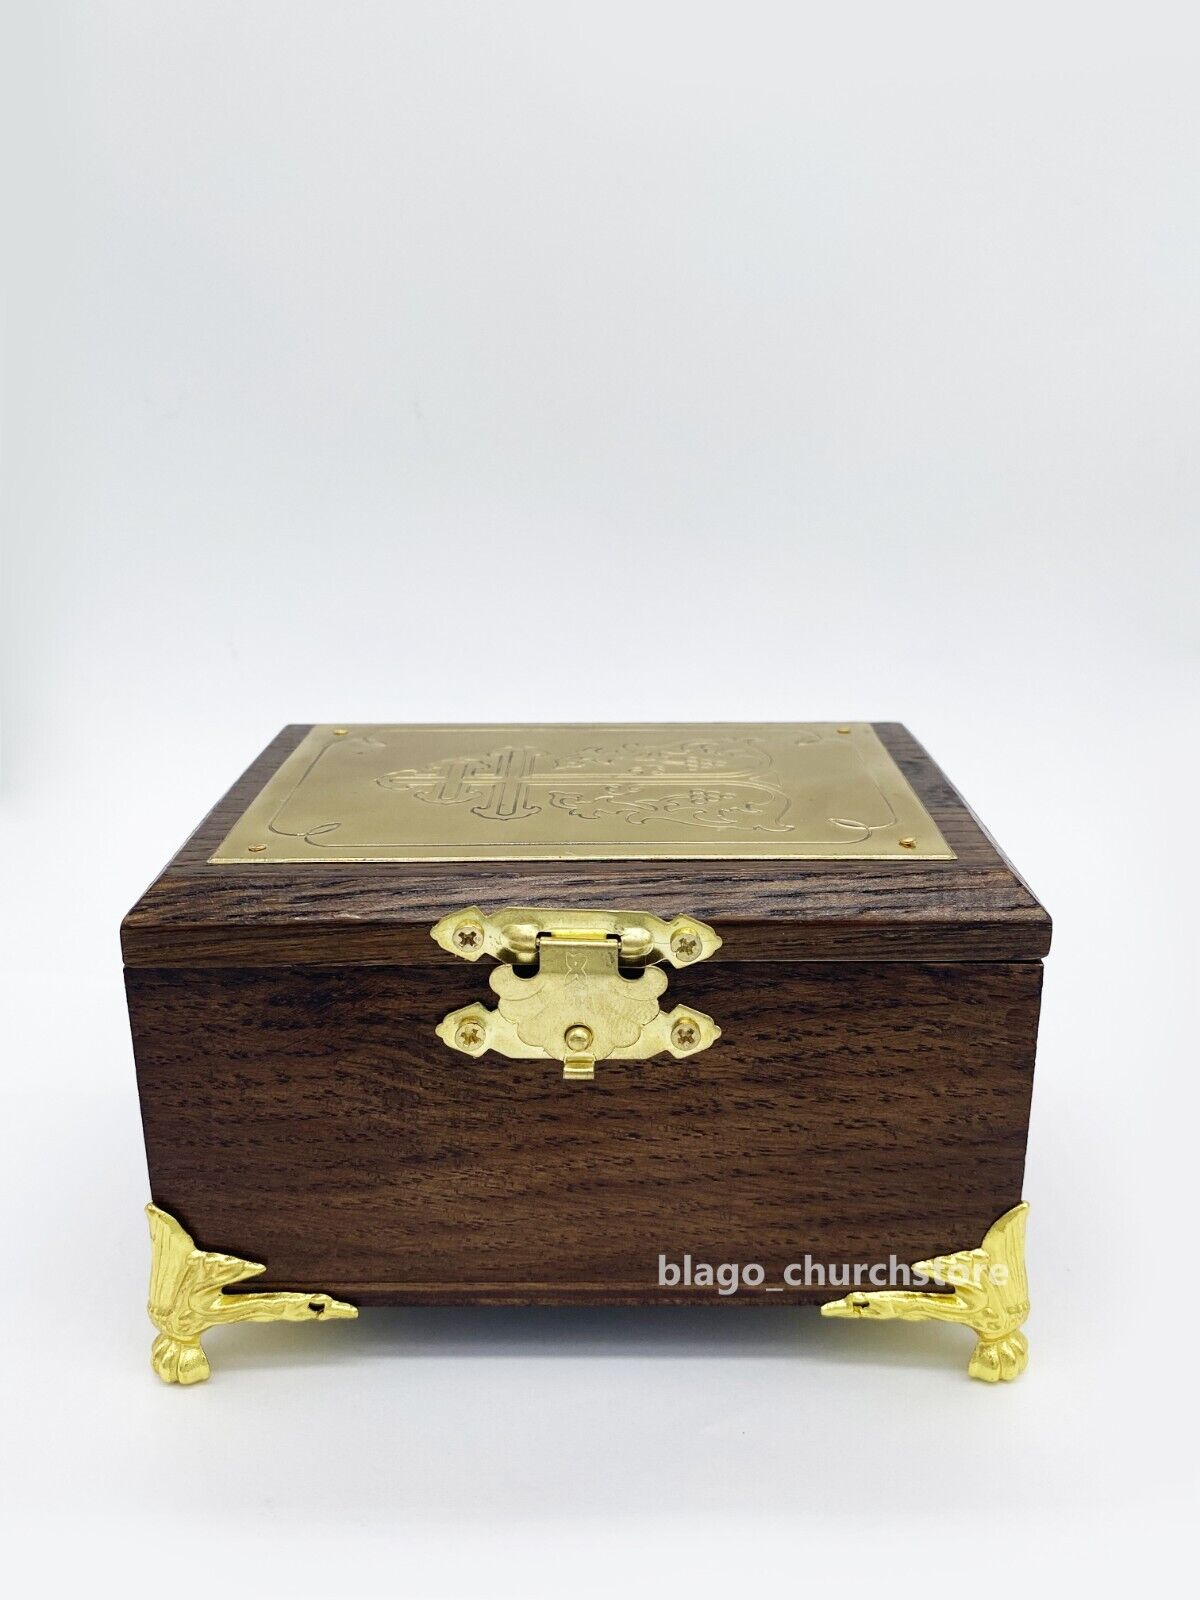 Elegant Wooden Ortxodox Baptismal Box with Exquisite Detailing 3.54'